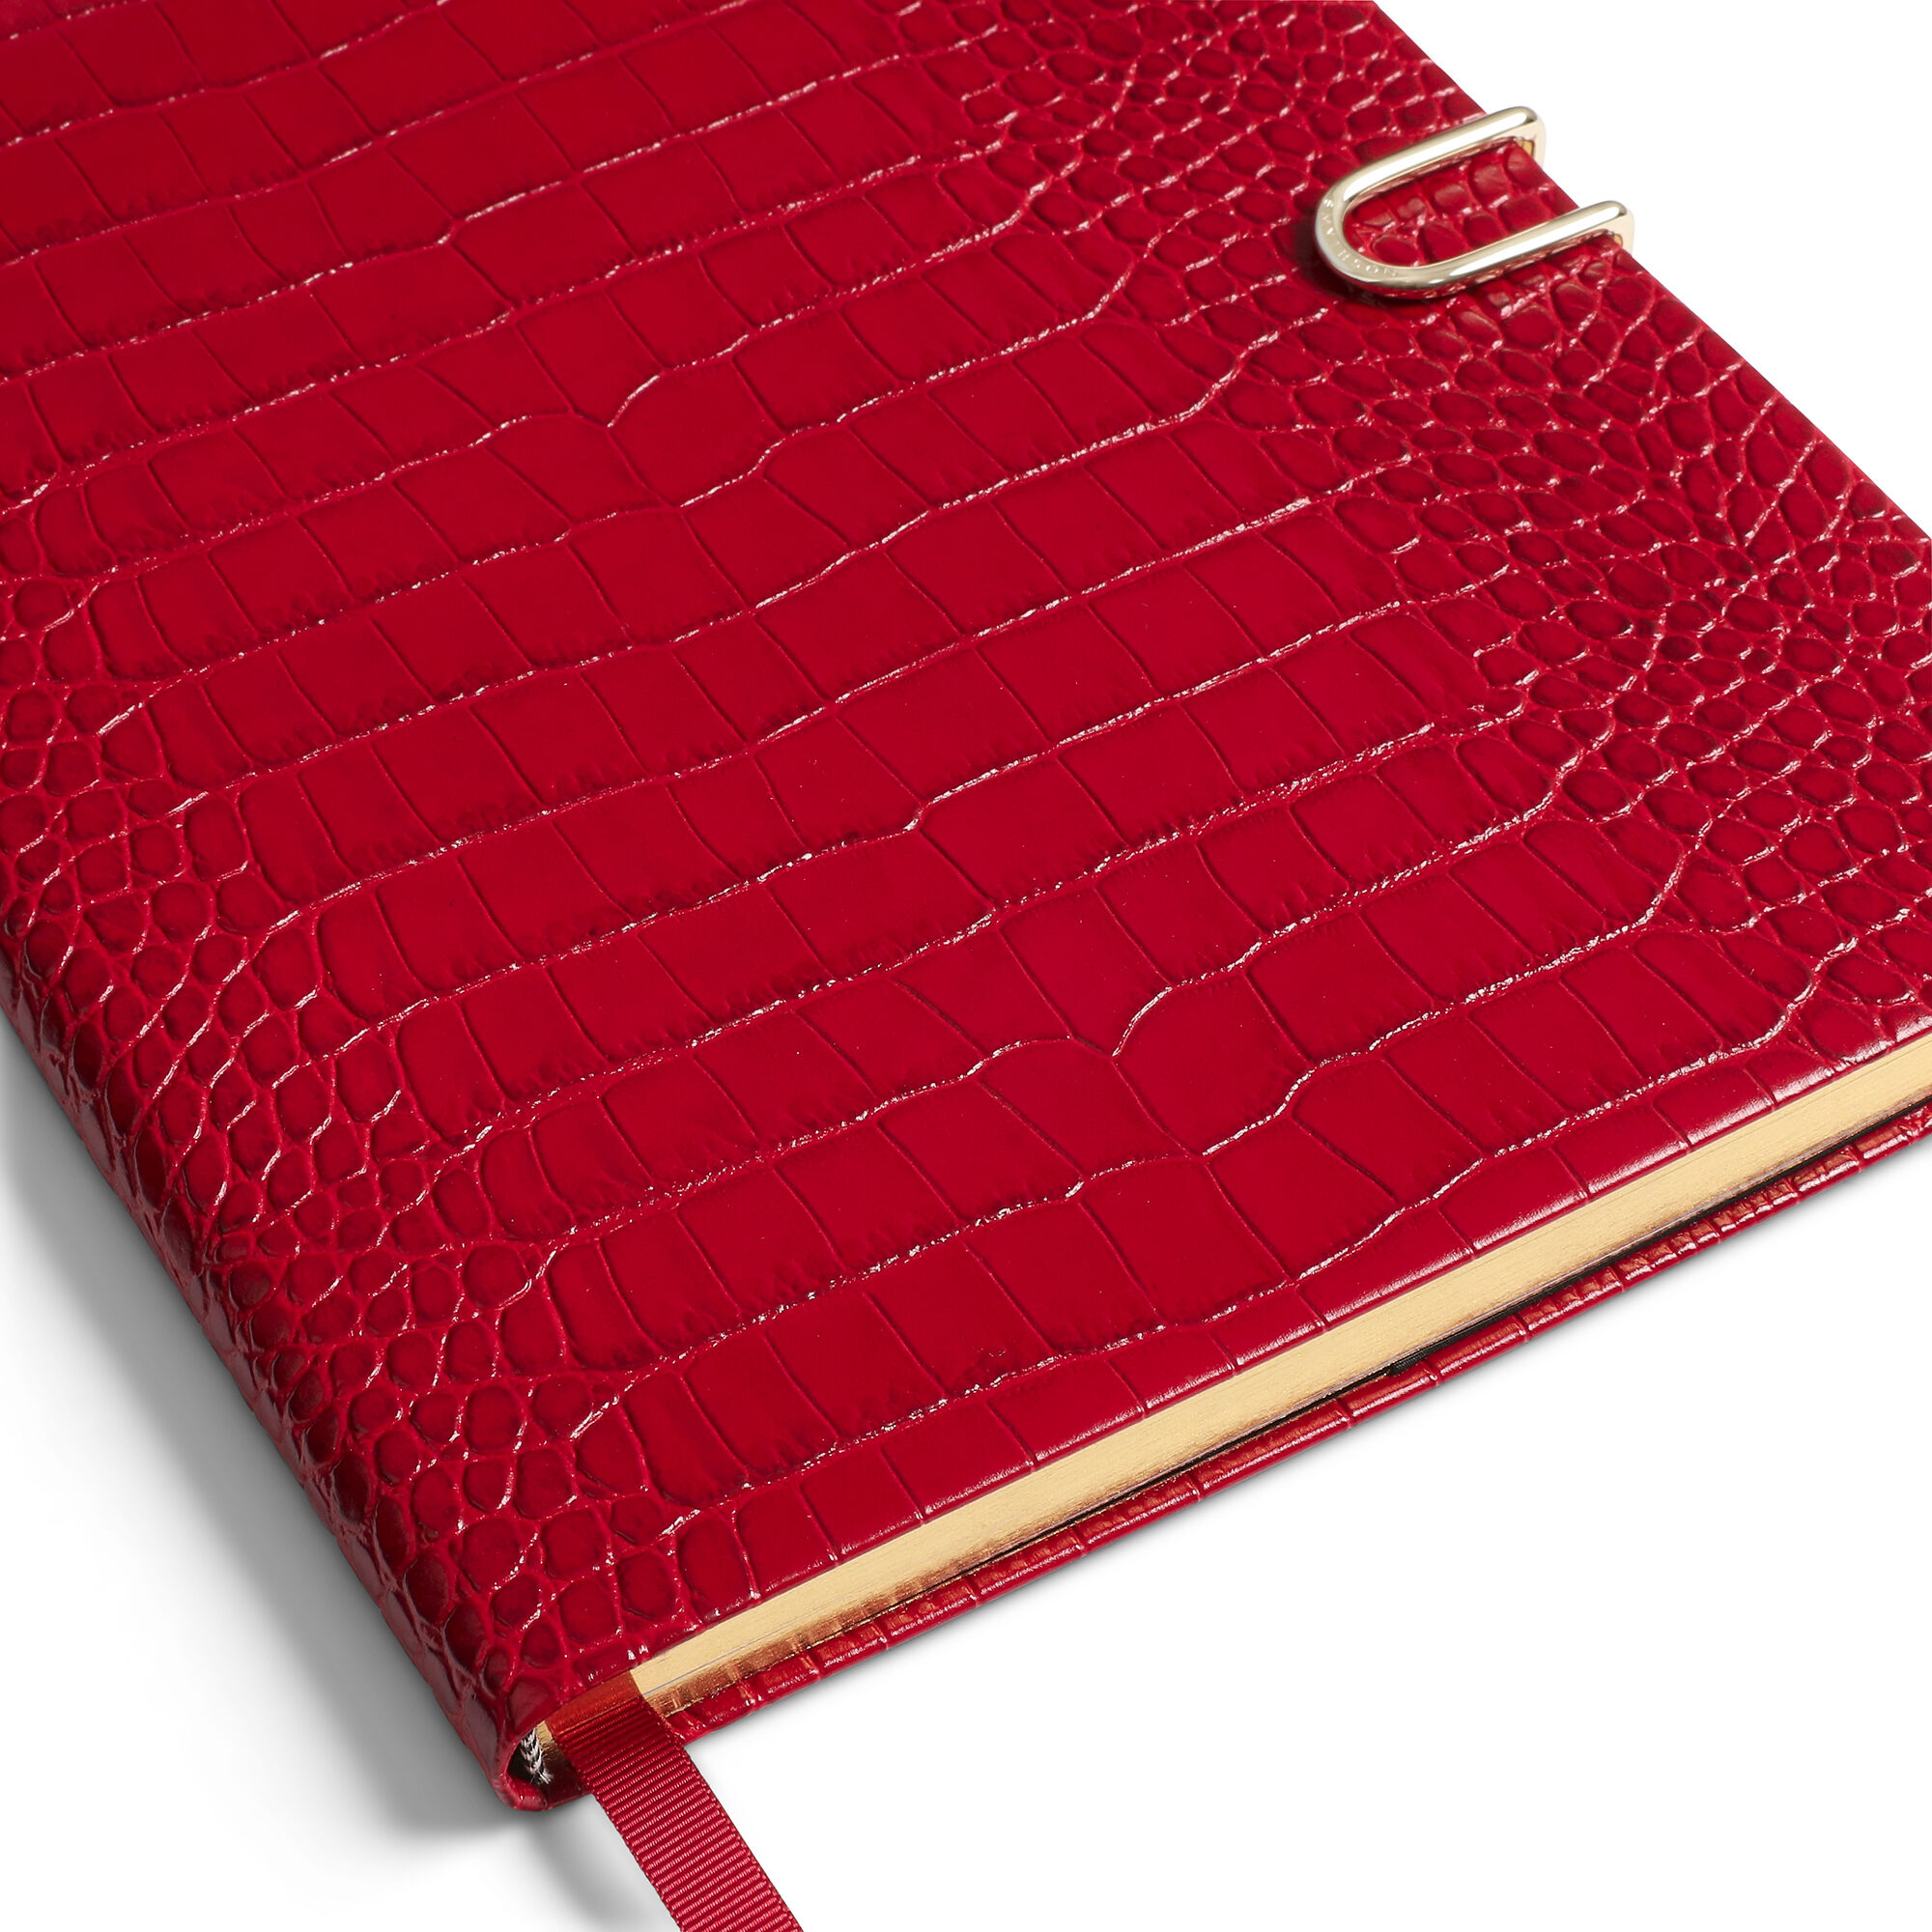 Portobello Notebook with Slide Closure in Mara in red | Smythson